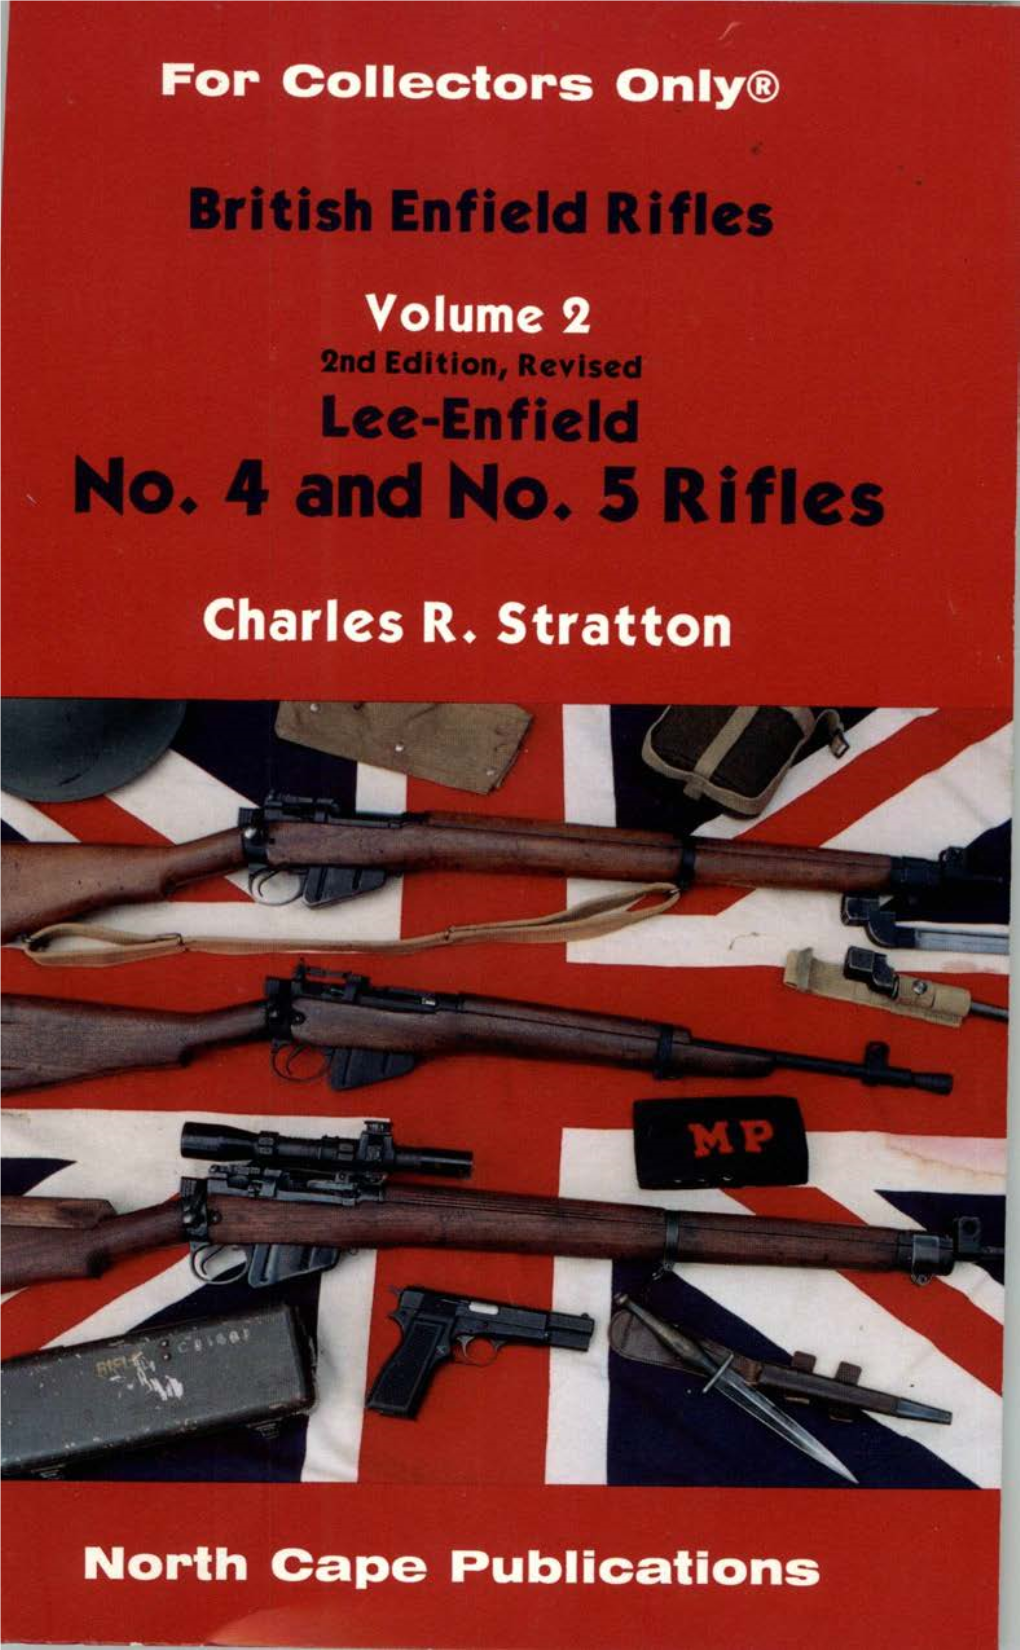 No. 4 and No. 5 Rifles